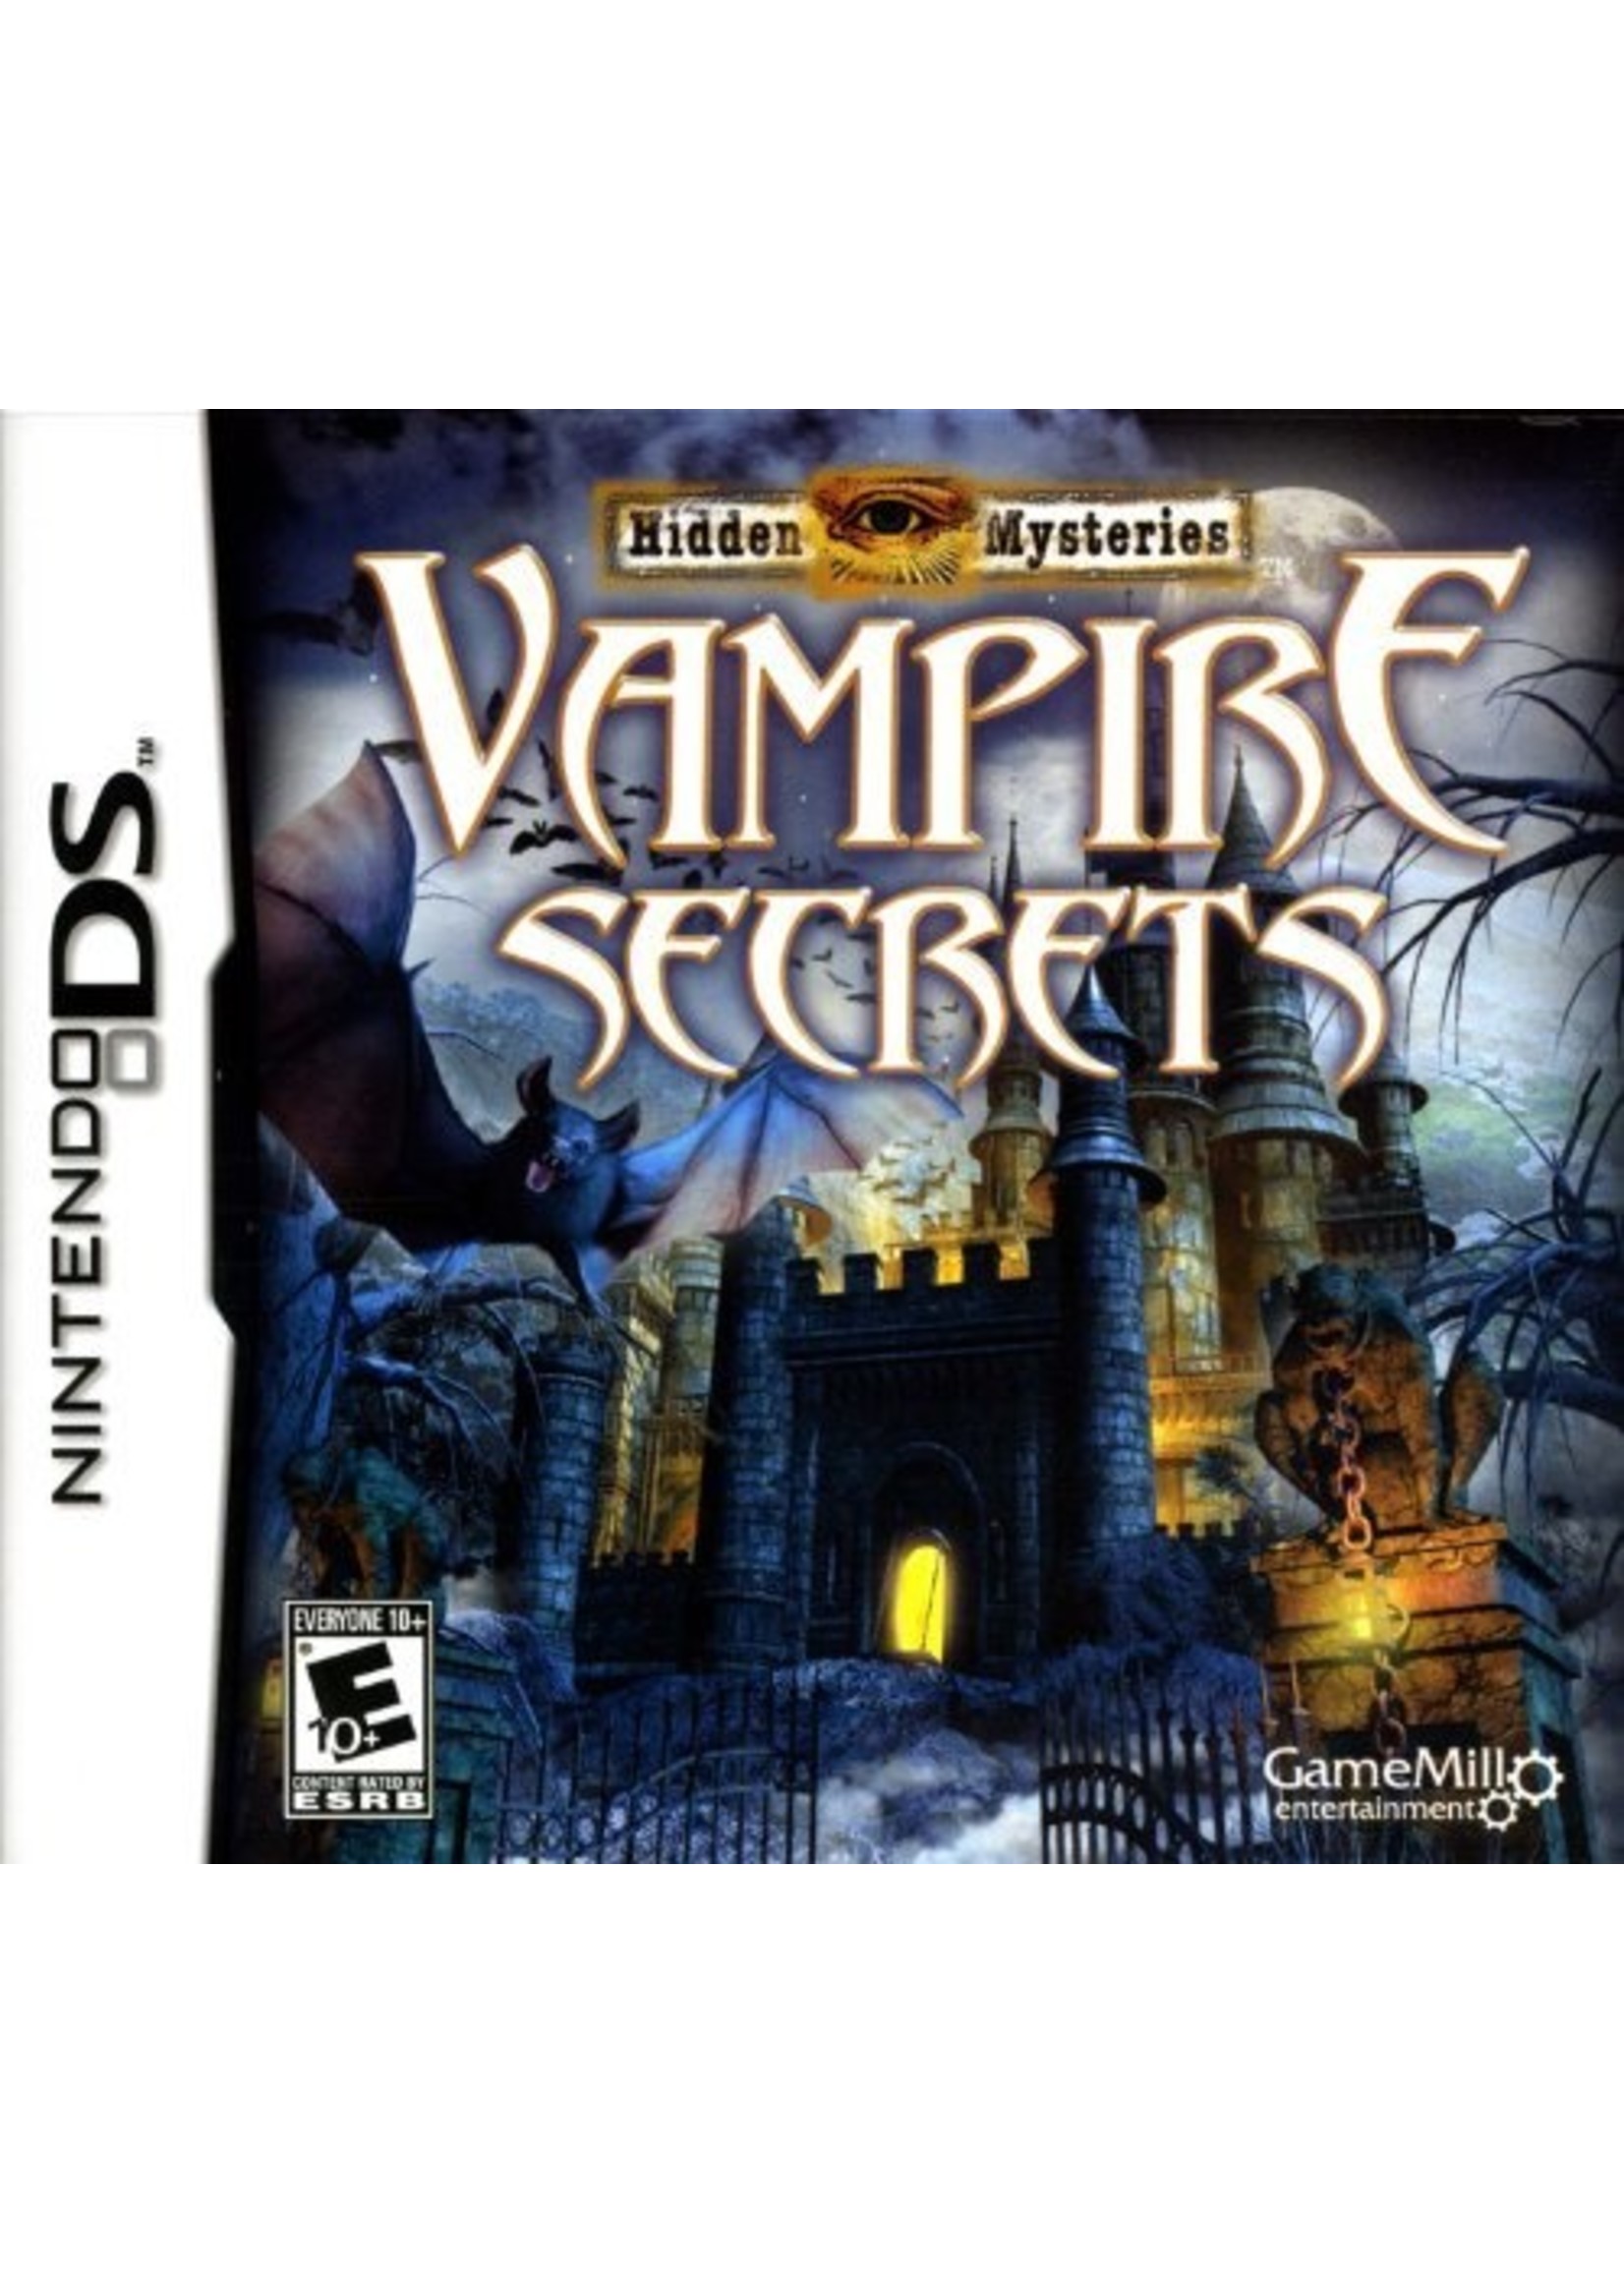 Nintendo DS Hidden Mysteries: Vampire Secrets - Cart Only